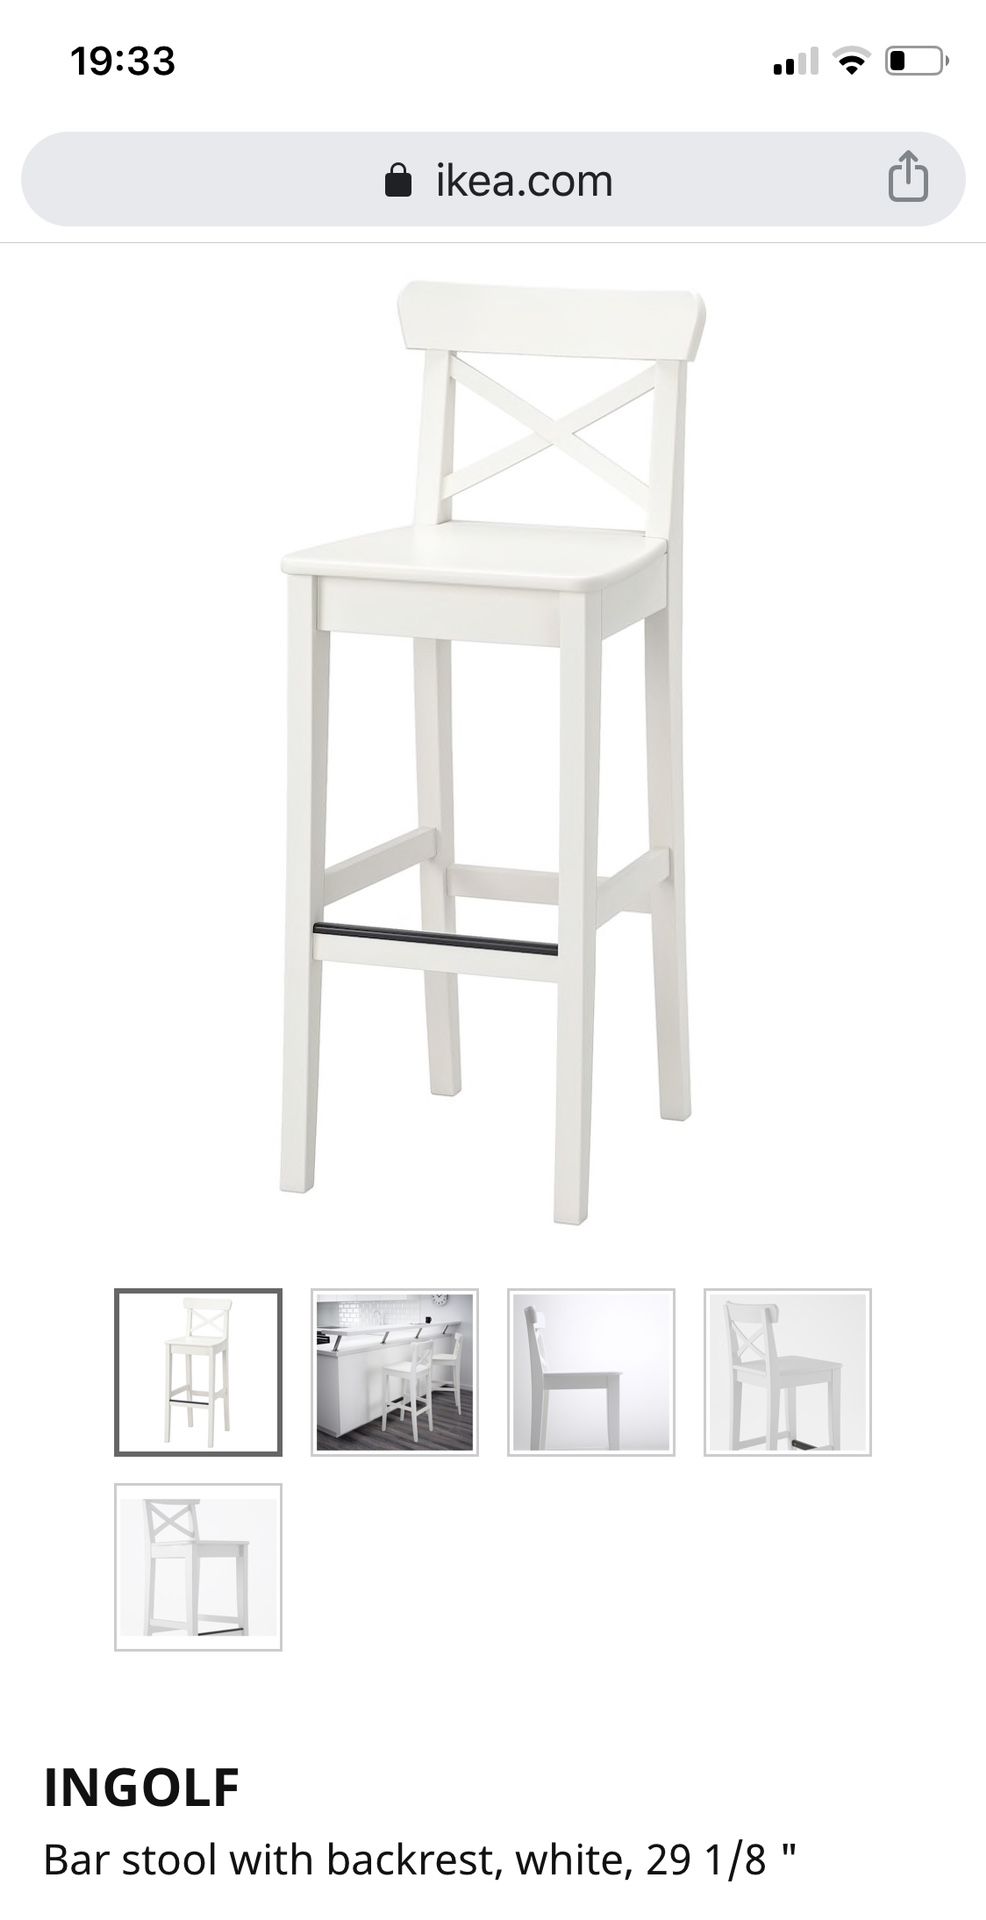 IKEA ingolf bar stools (29”)